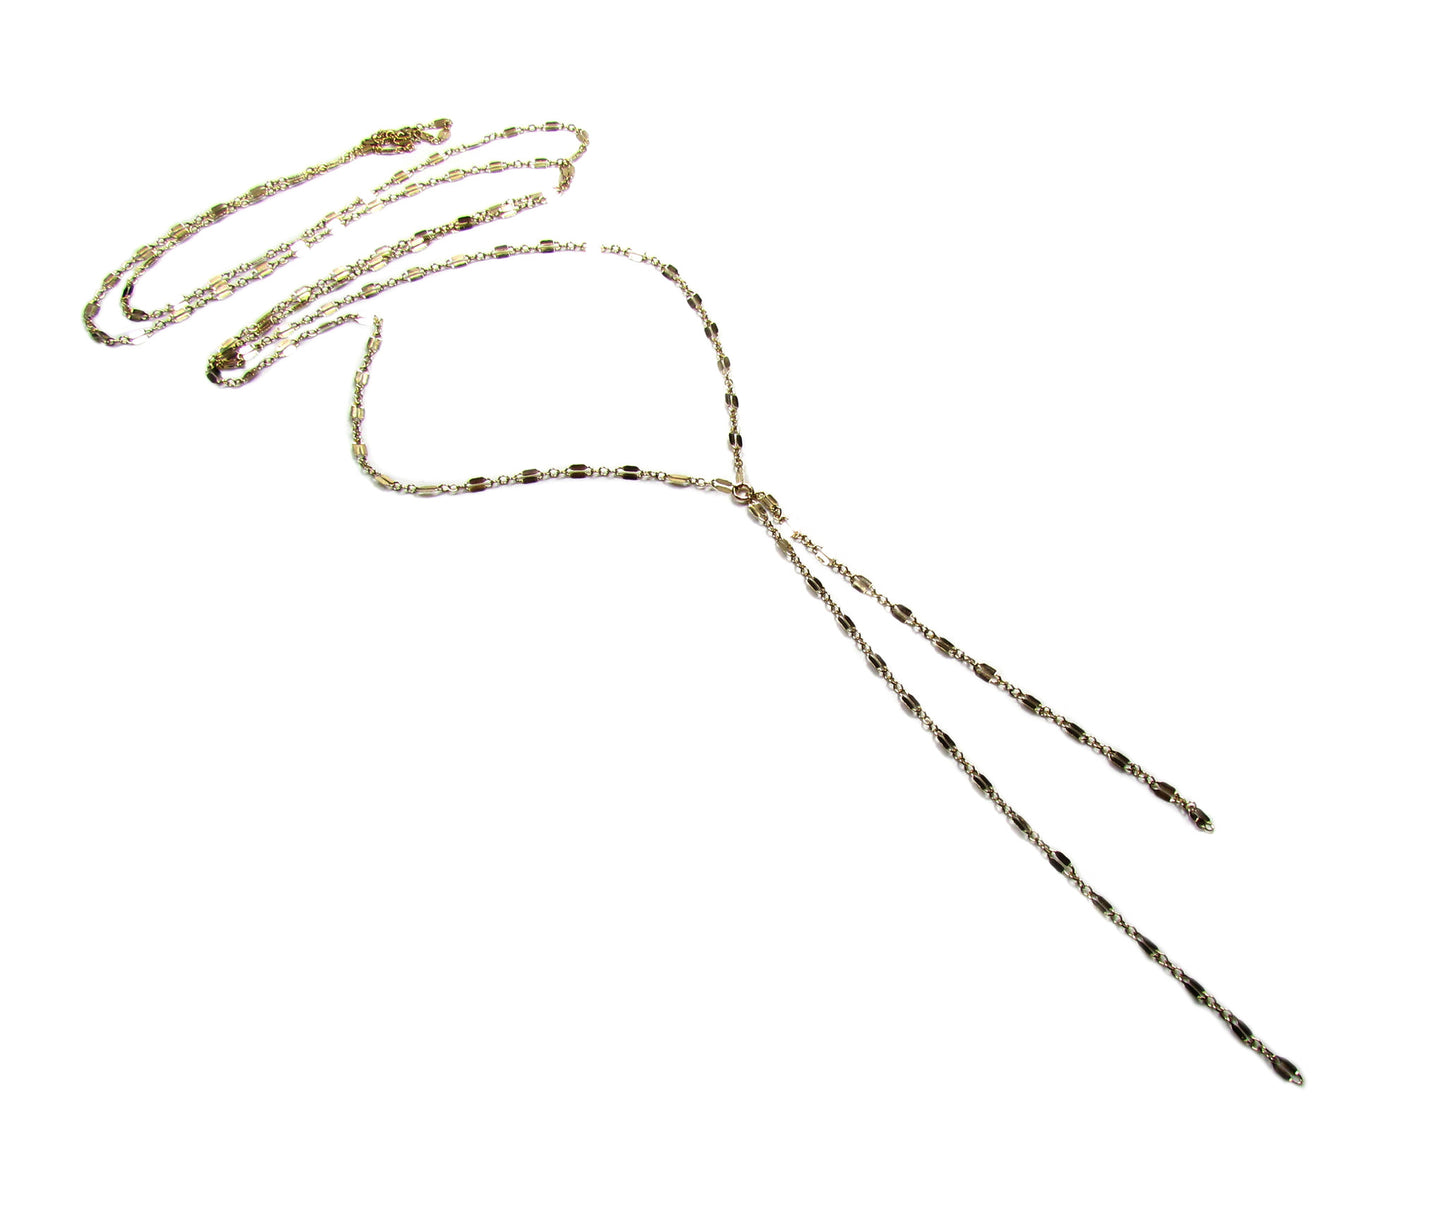 Wrap Lariat Necklace - Wear 11 ways